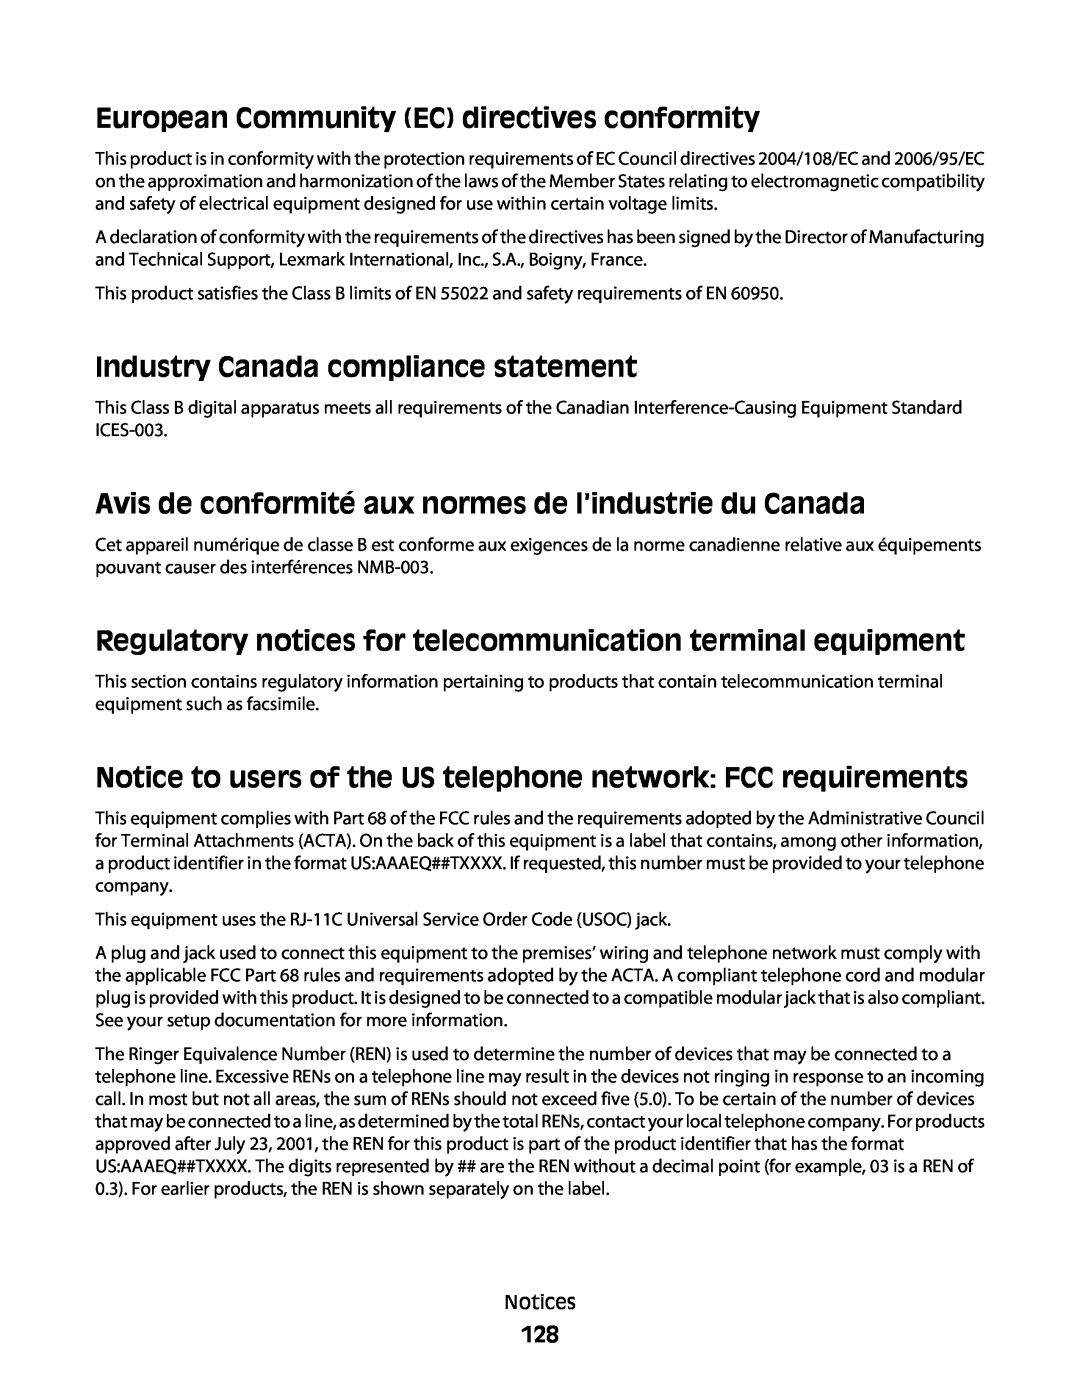 Lexmark 301, S500, 30E manual European Community EC directives conformity, Industry Canada compliance statement 